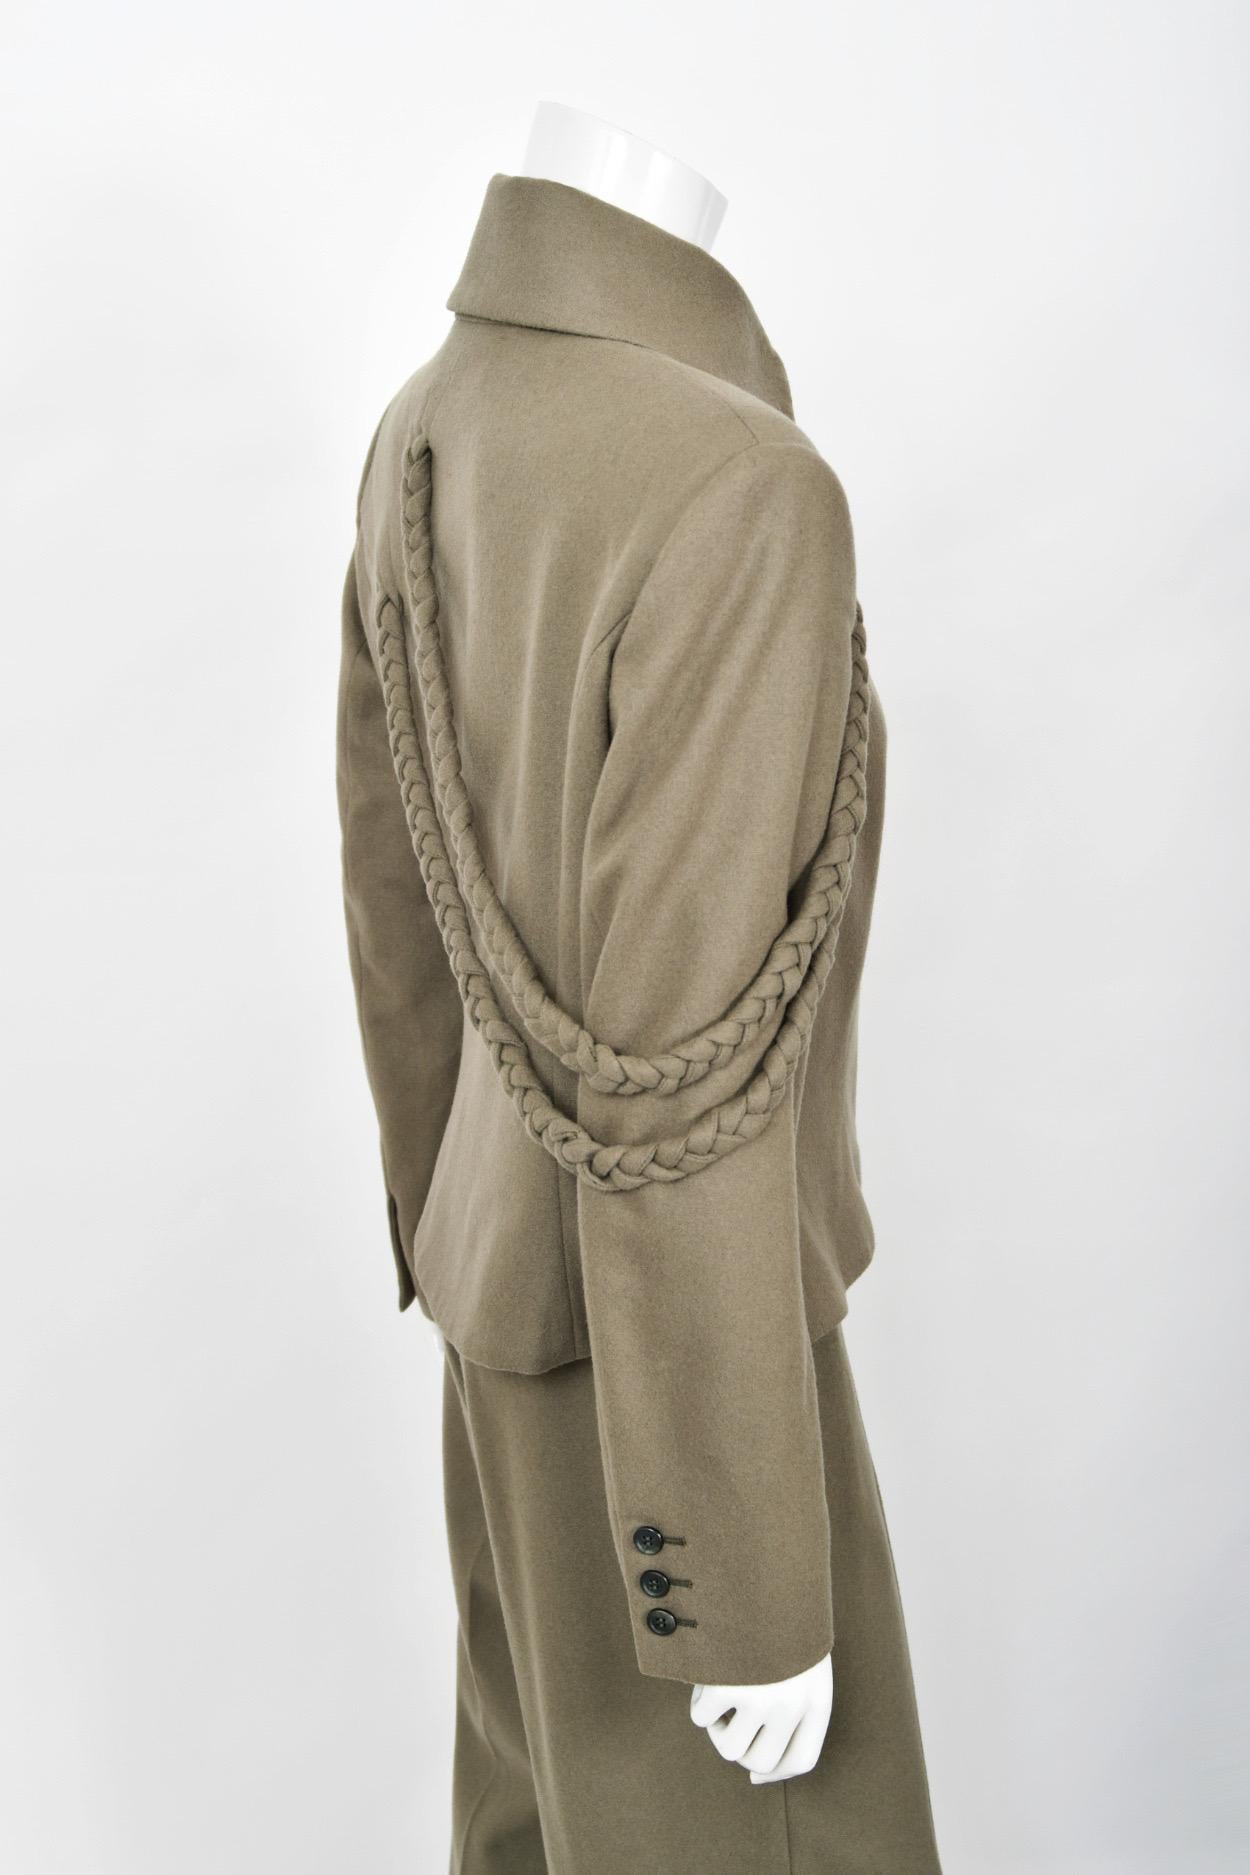 2001 Alexander McQueen Documented Runway Moss-Green Wool Braided Jacket Pantsuit For Sale 10